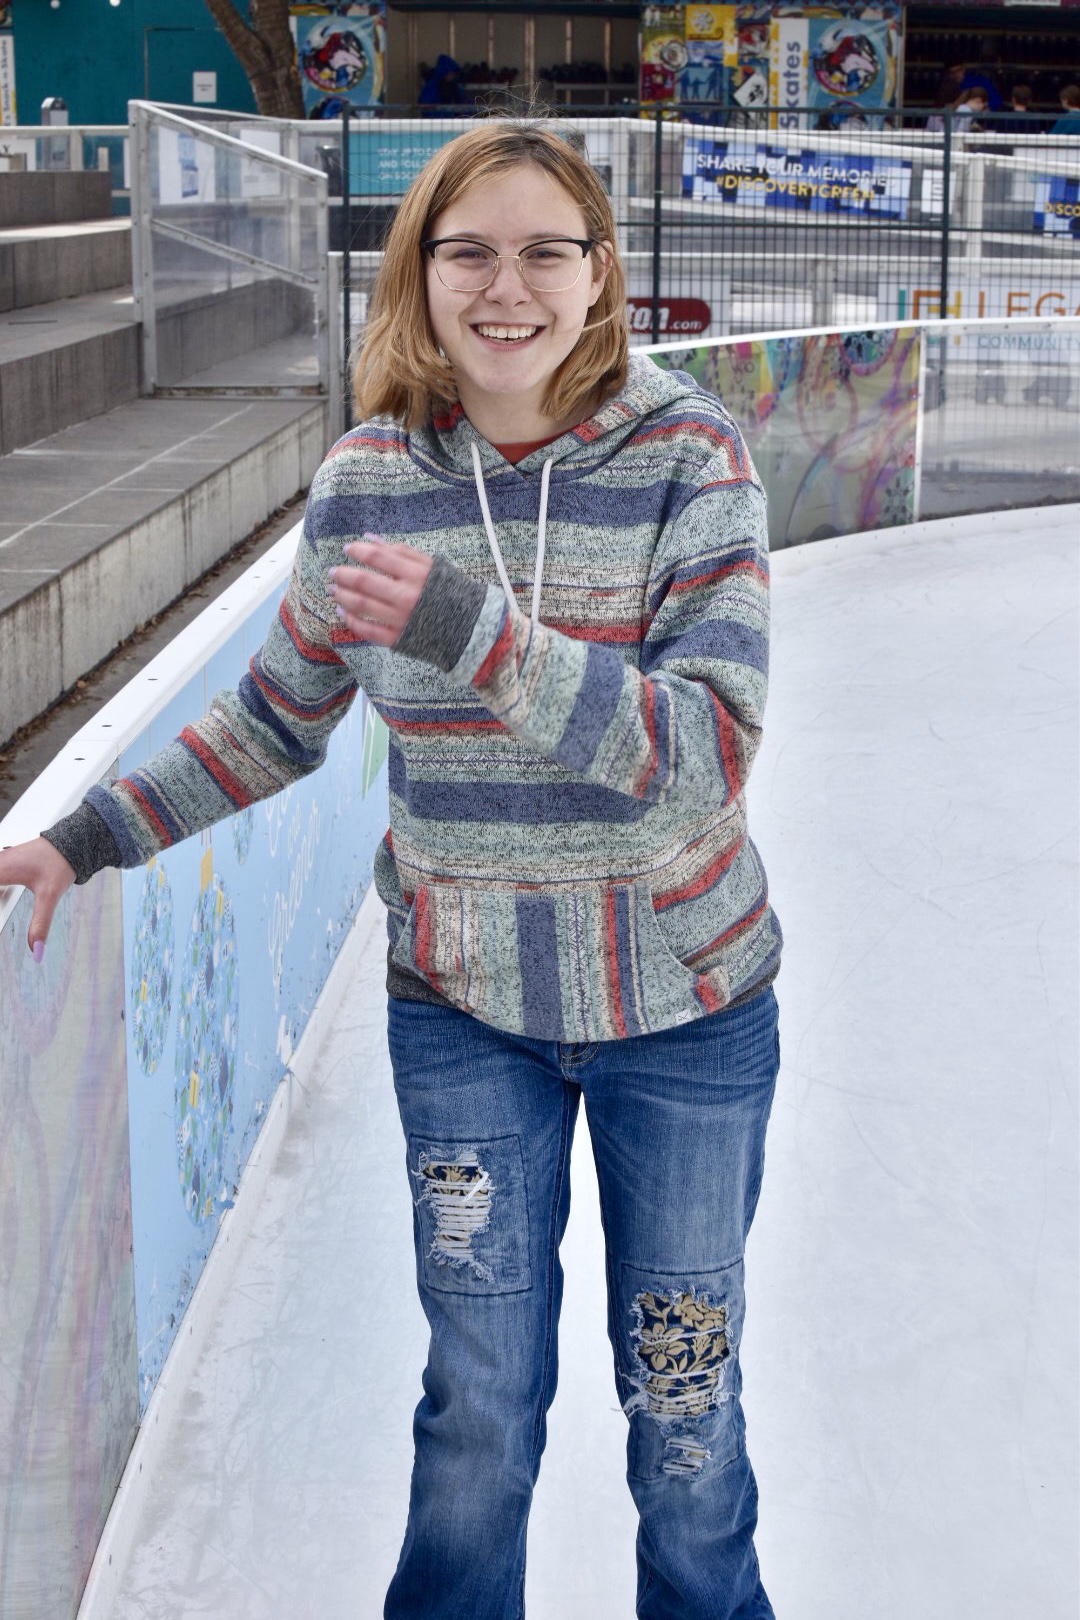 2020 Ice Skating Event